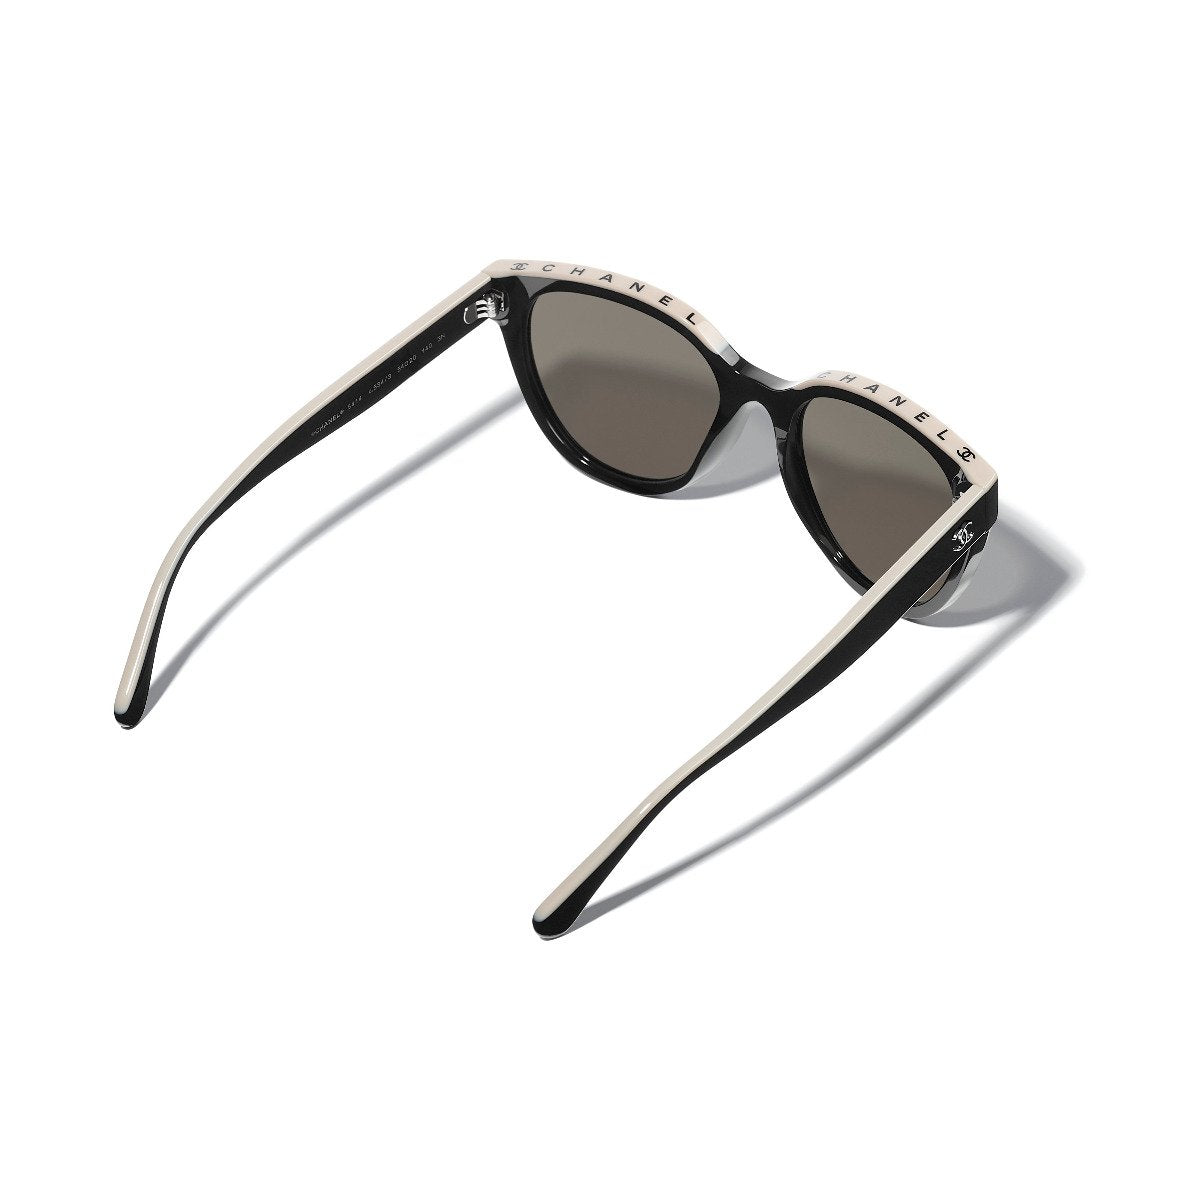 NEW, AUTHENTIC CHANEL CH 5410 Round on Mercari  Chanel, Sunglasses, Round  mirrored sunglasses